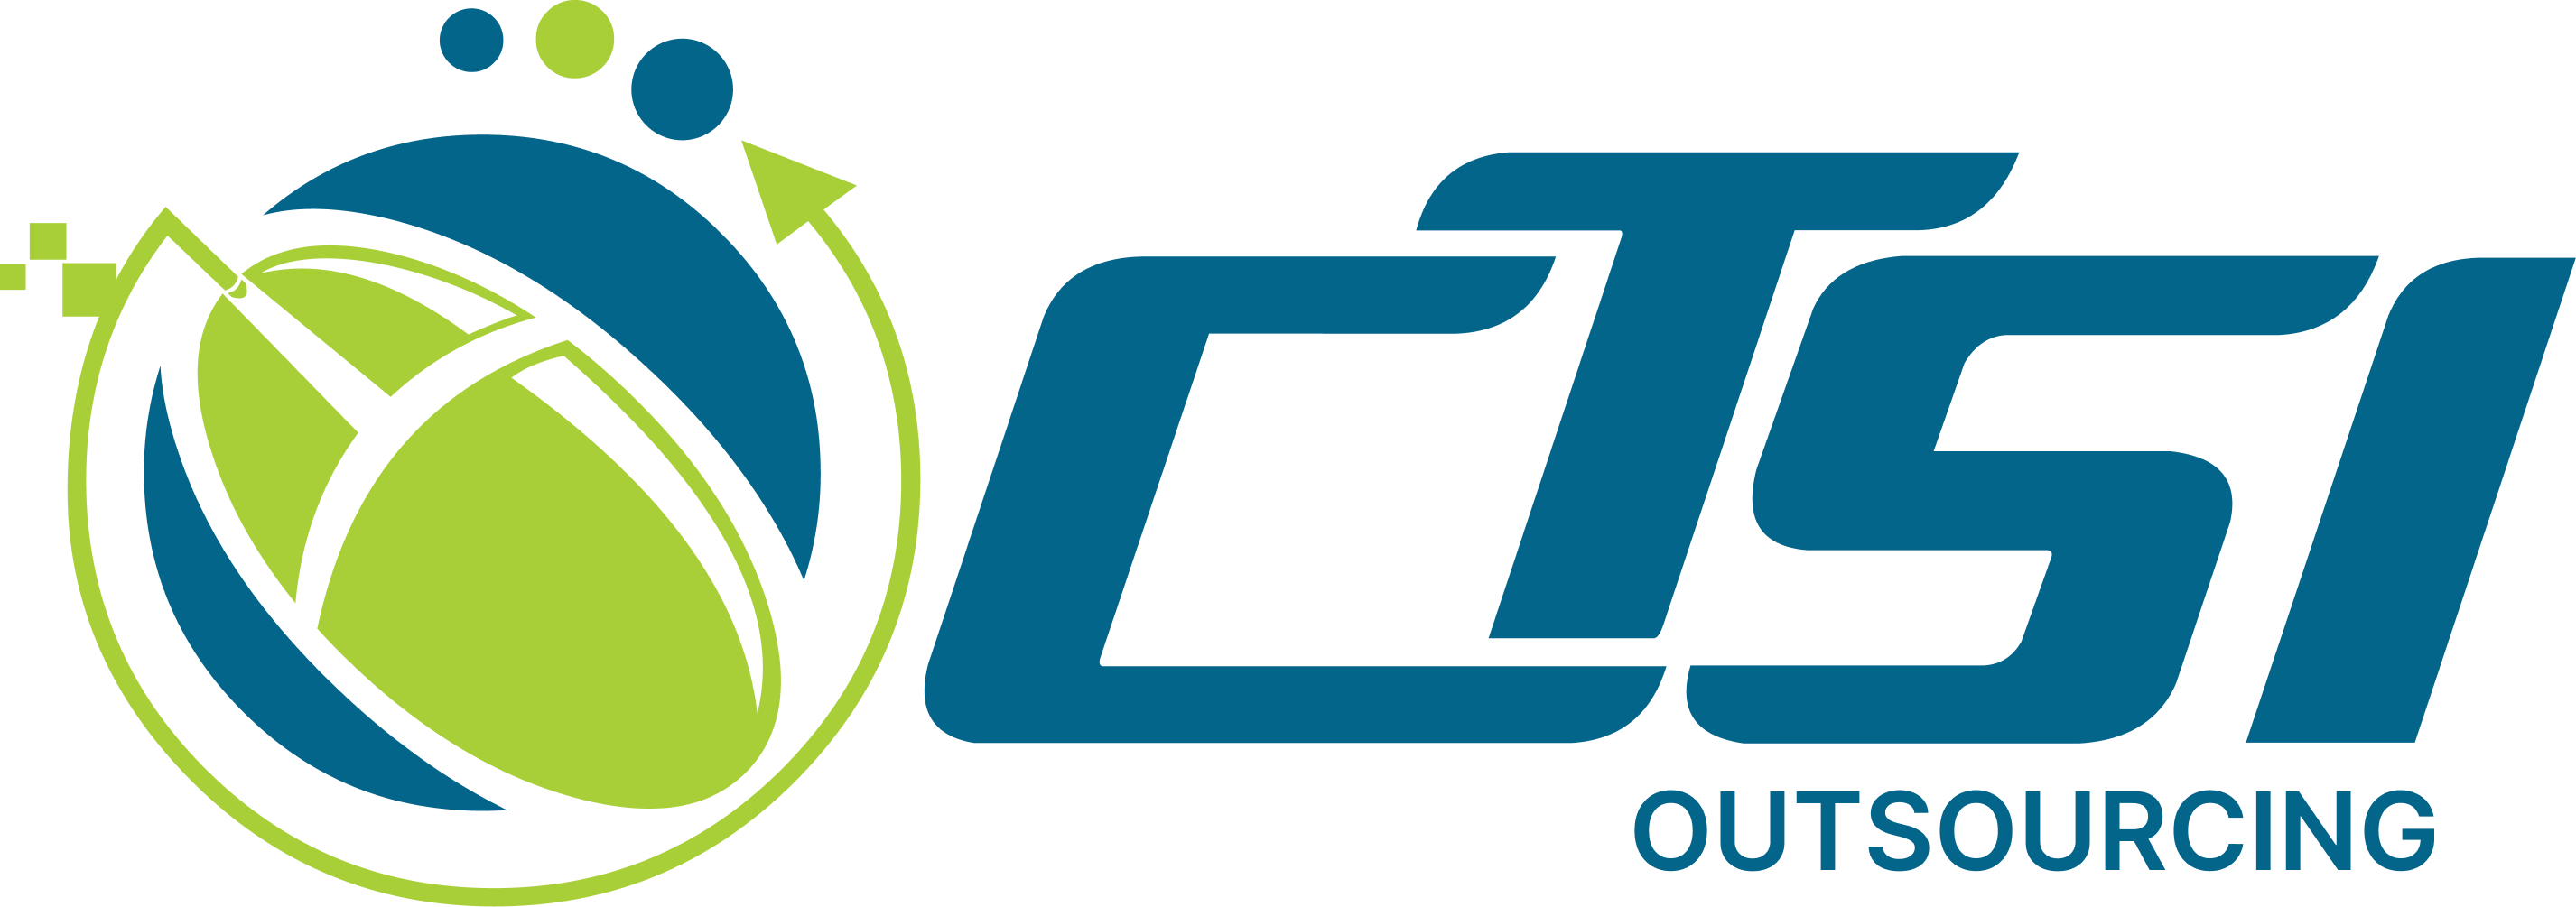 Comnet Technical Solutions, Inc Logo